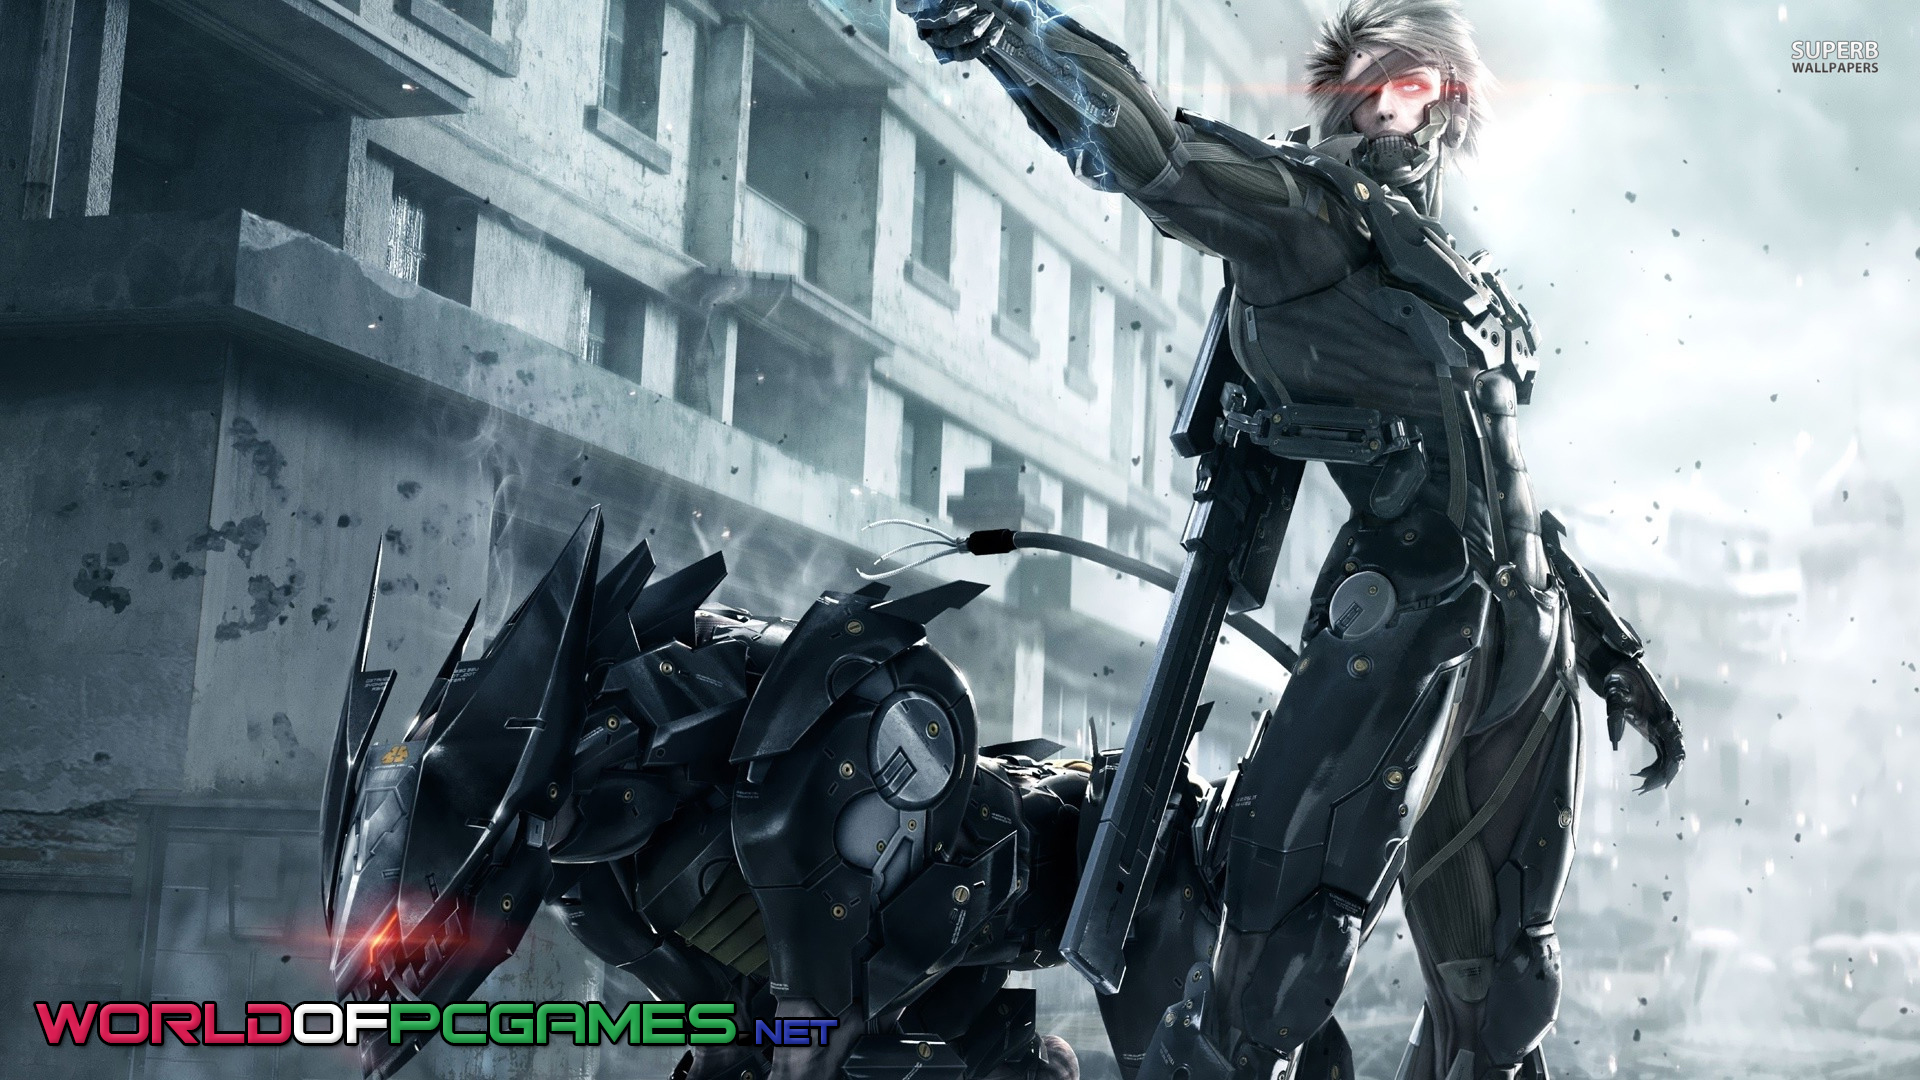 Metal Gear Rising Revengeance Free Download PC Game By worldof-pcgames.netm